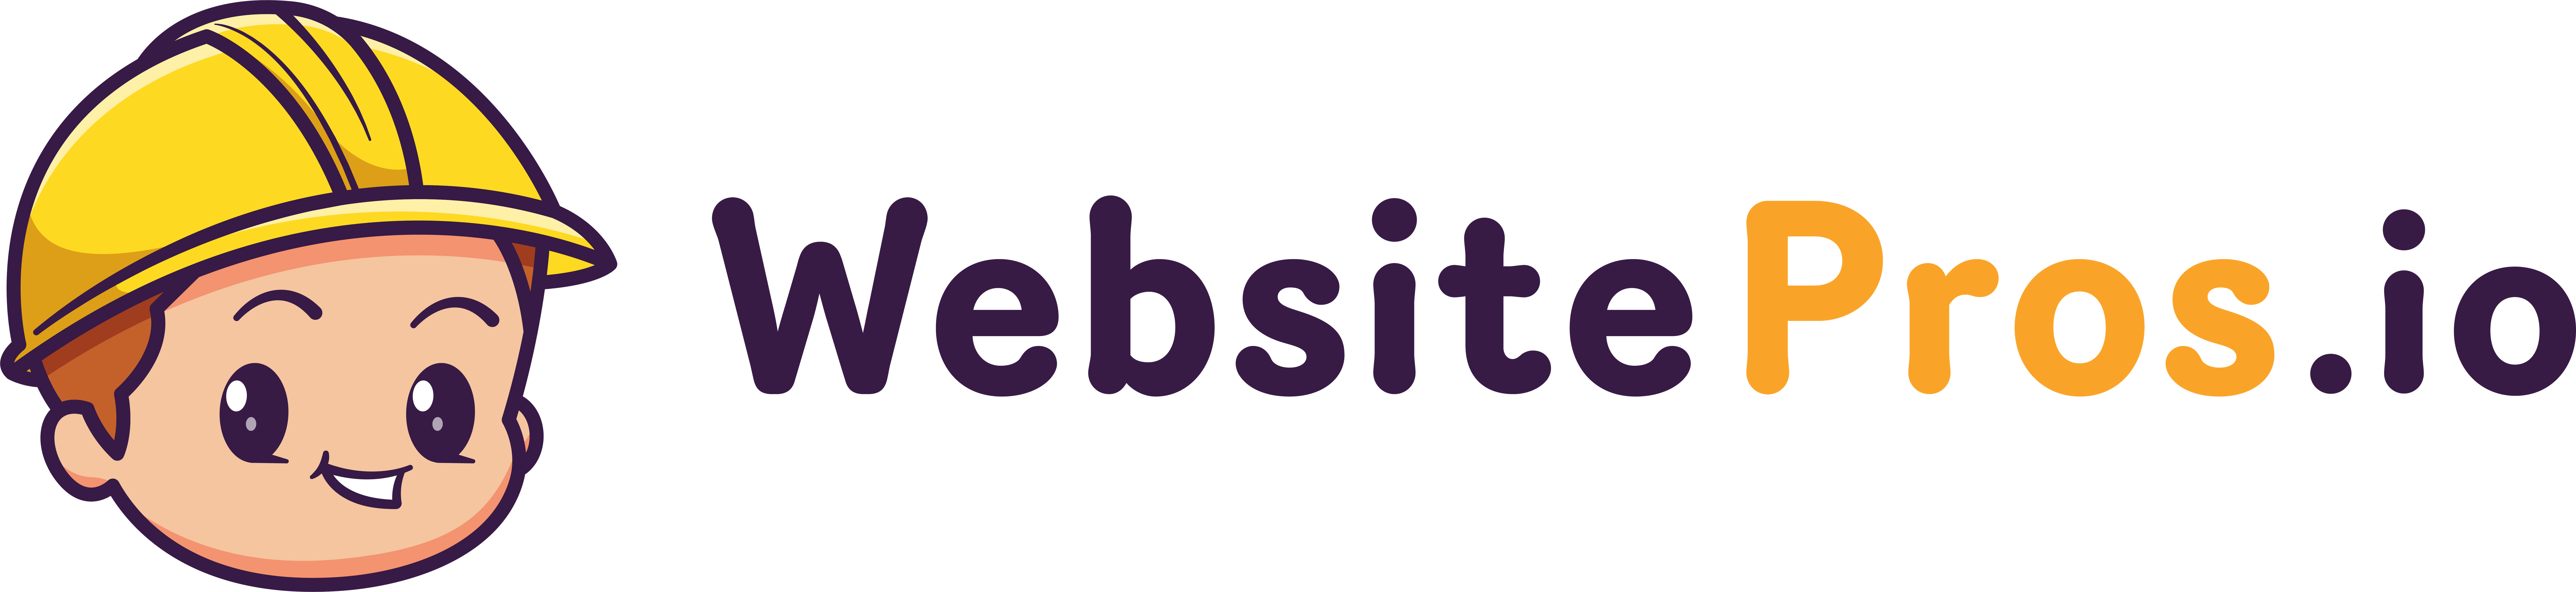 WebsitePros.io logo